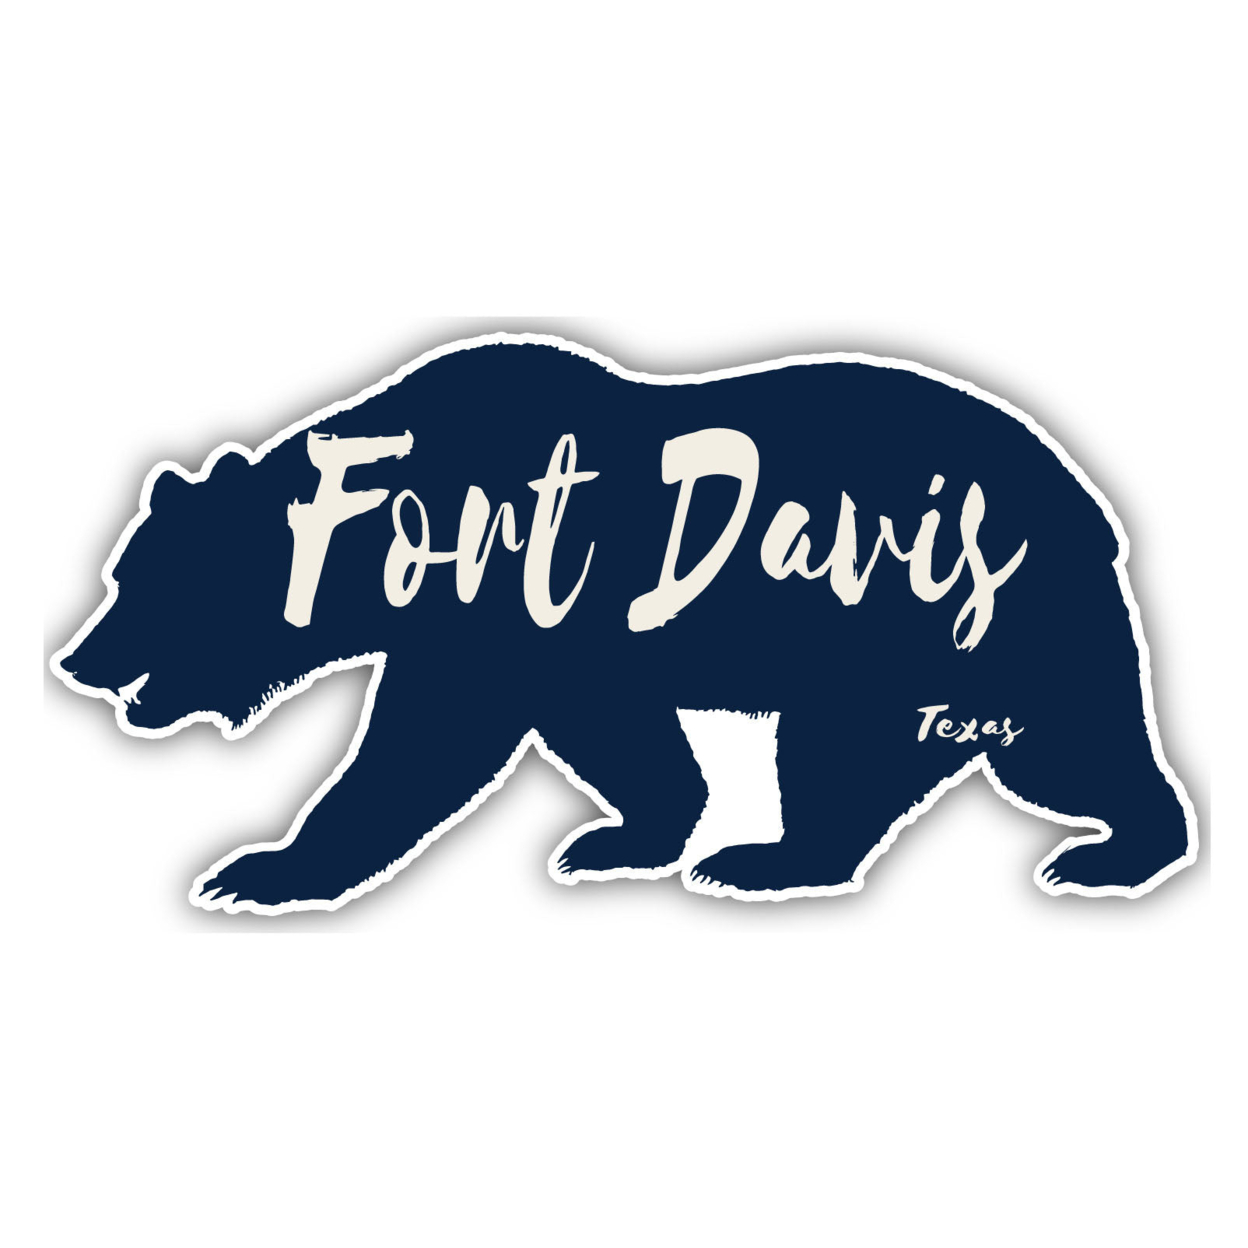 Fort Davis Texas Souvenir Decorative Stickers (Choose Theme And Size) - Single Unit, 2-Inch, Tent